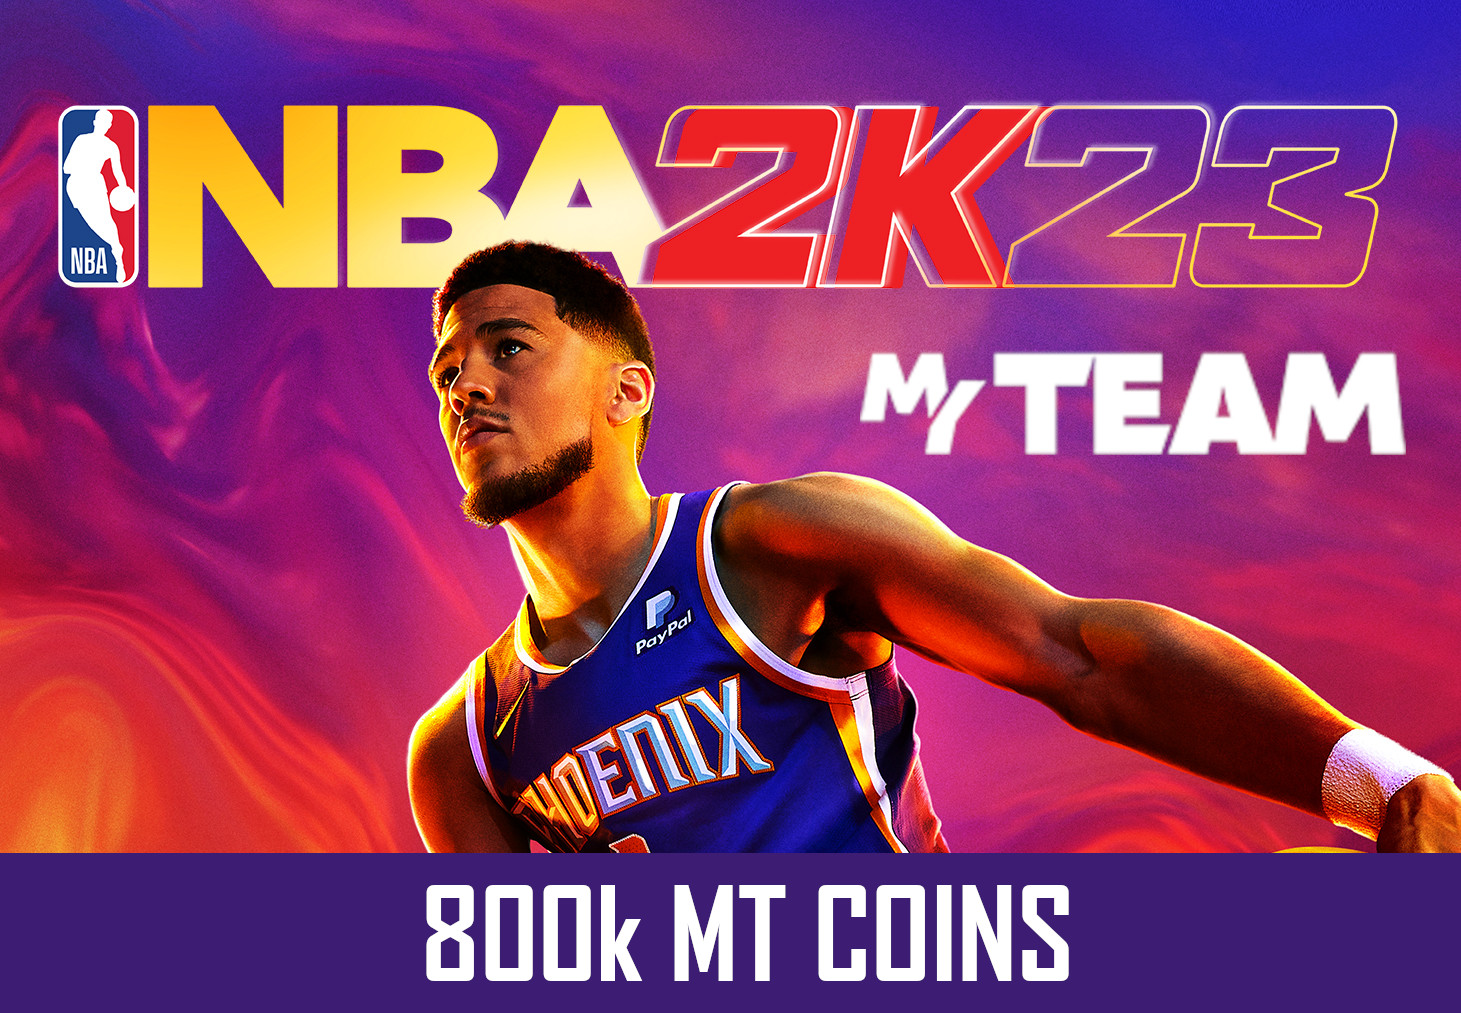 NBA 2K23 - 800k MT Coins - GLOBAL PC